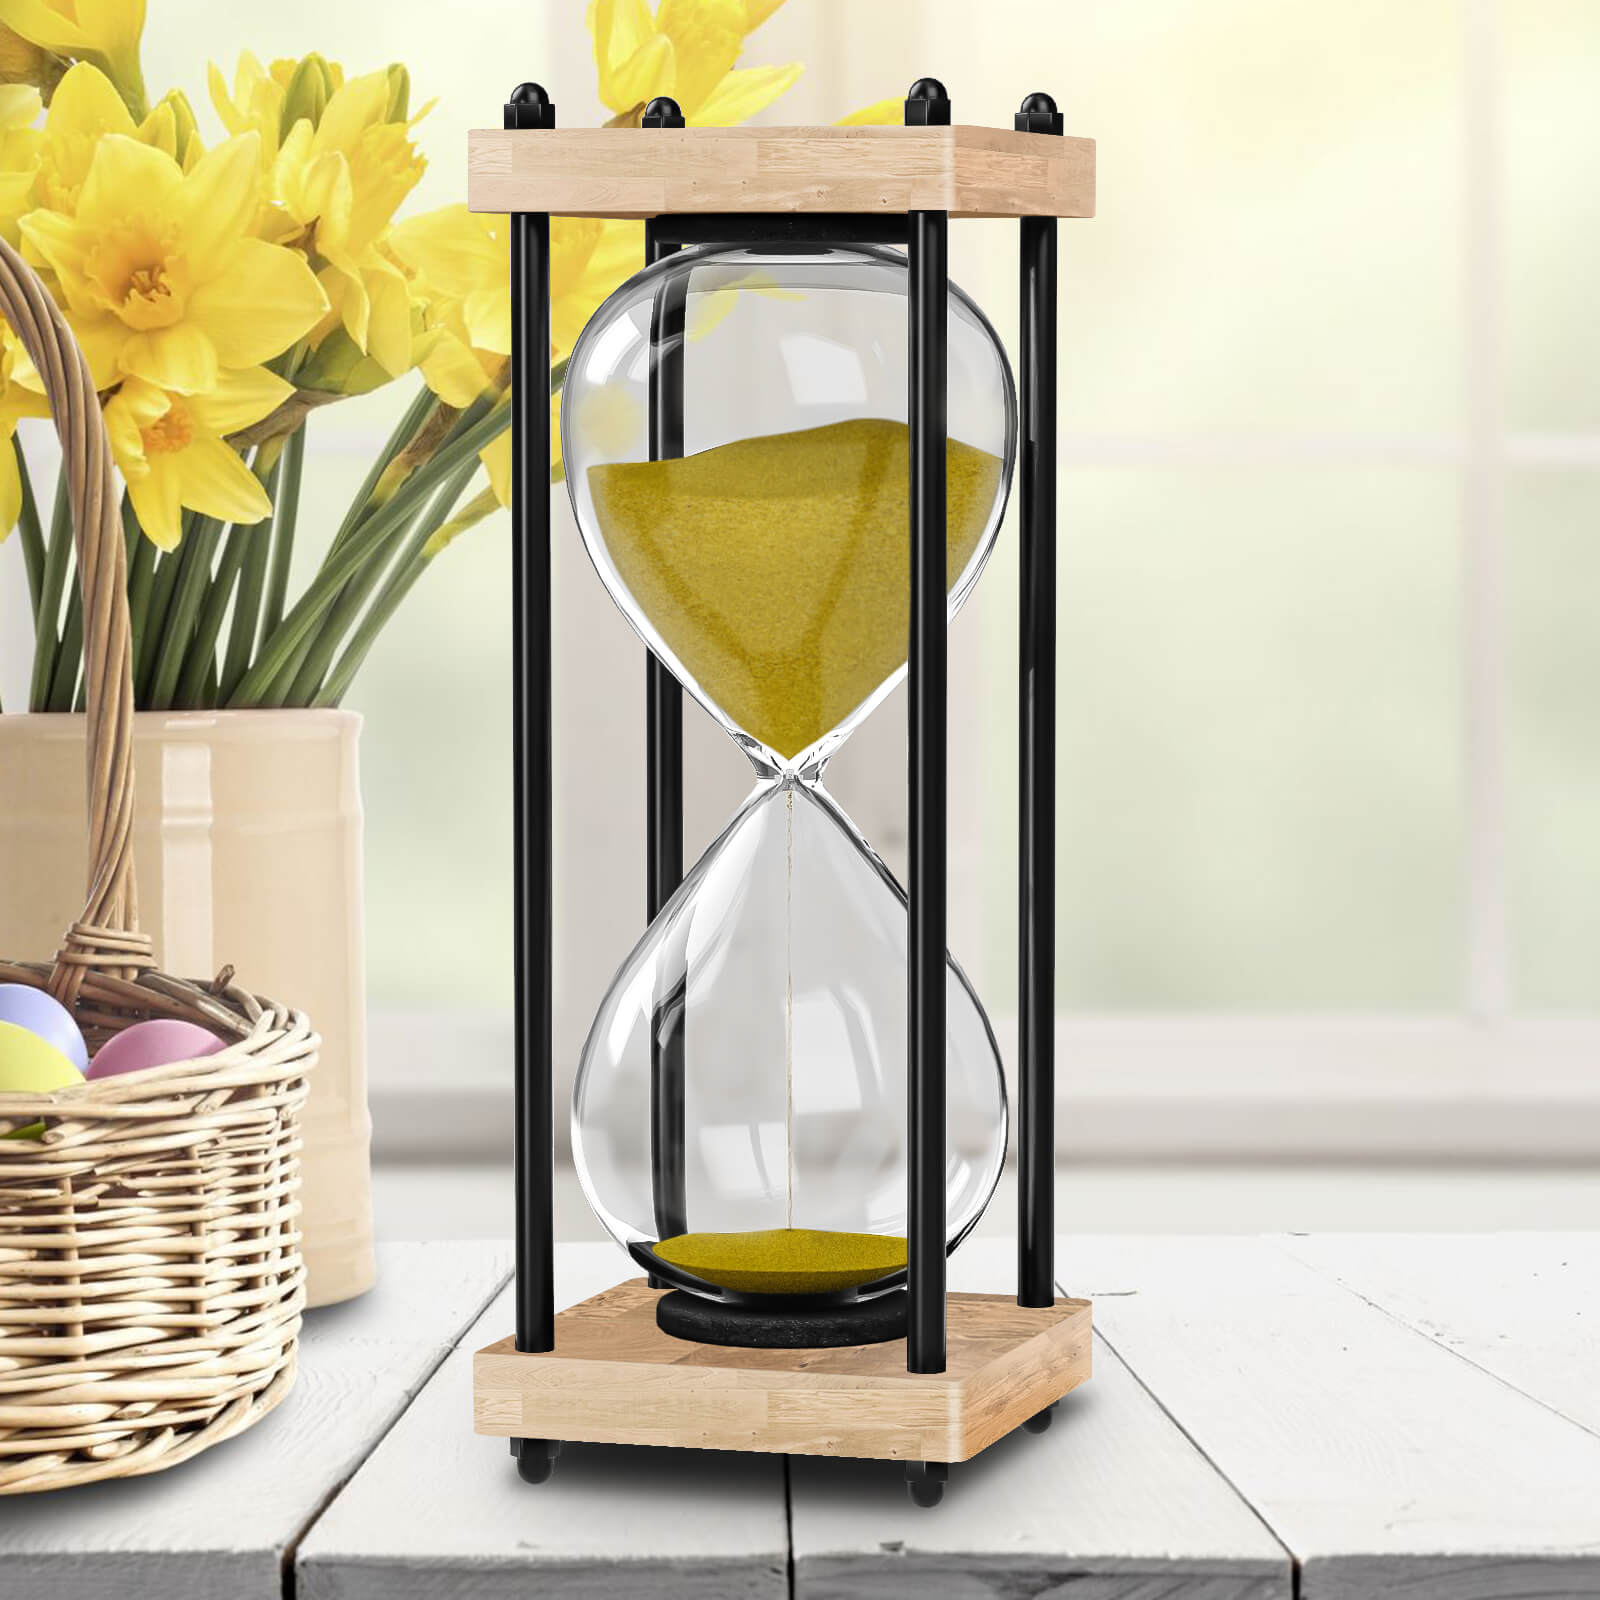 Hourglass sand clock